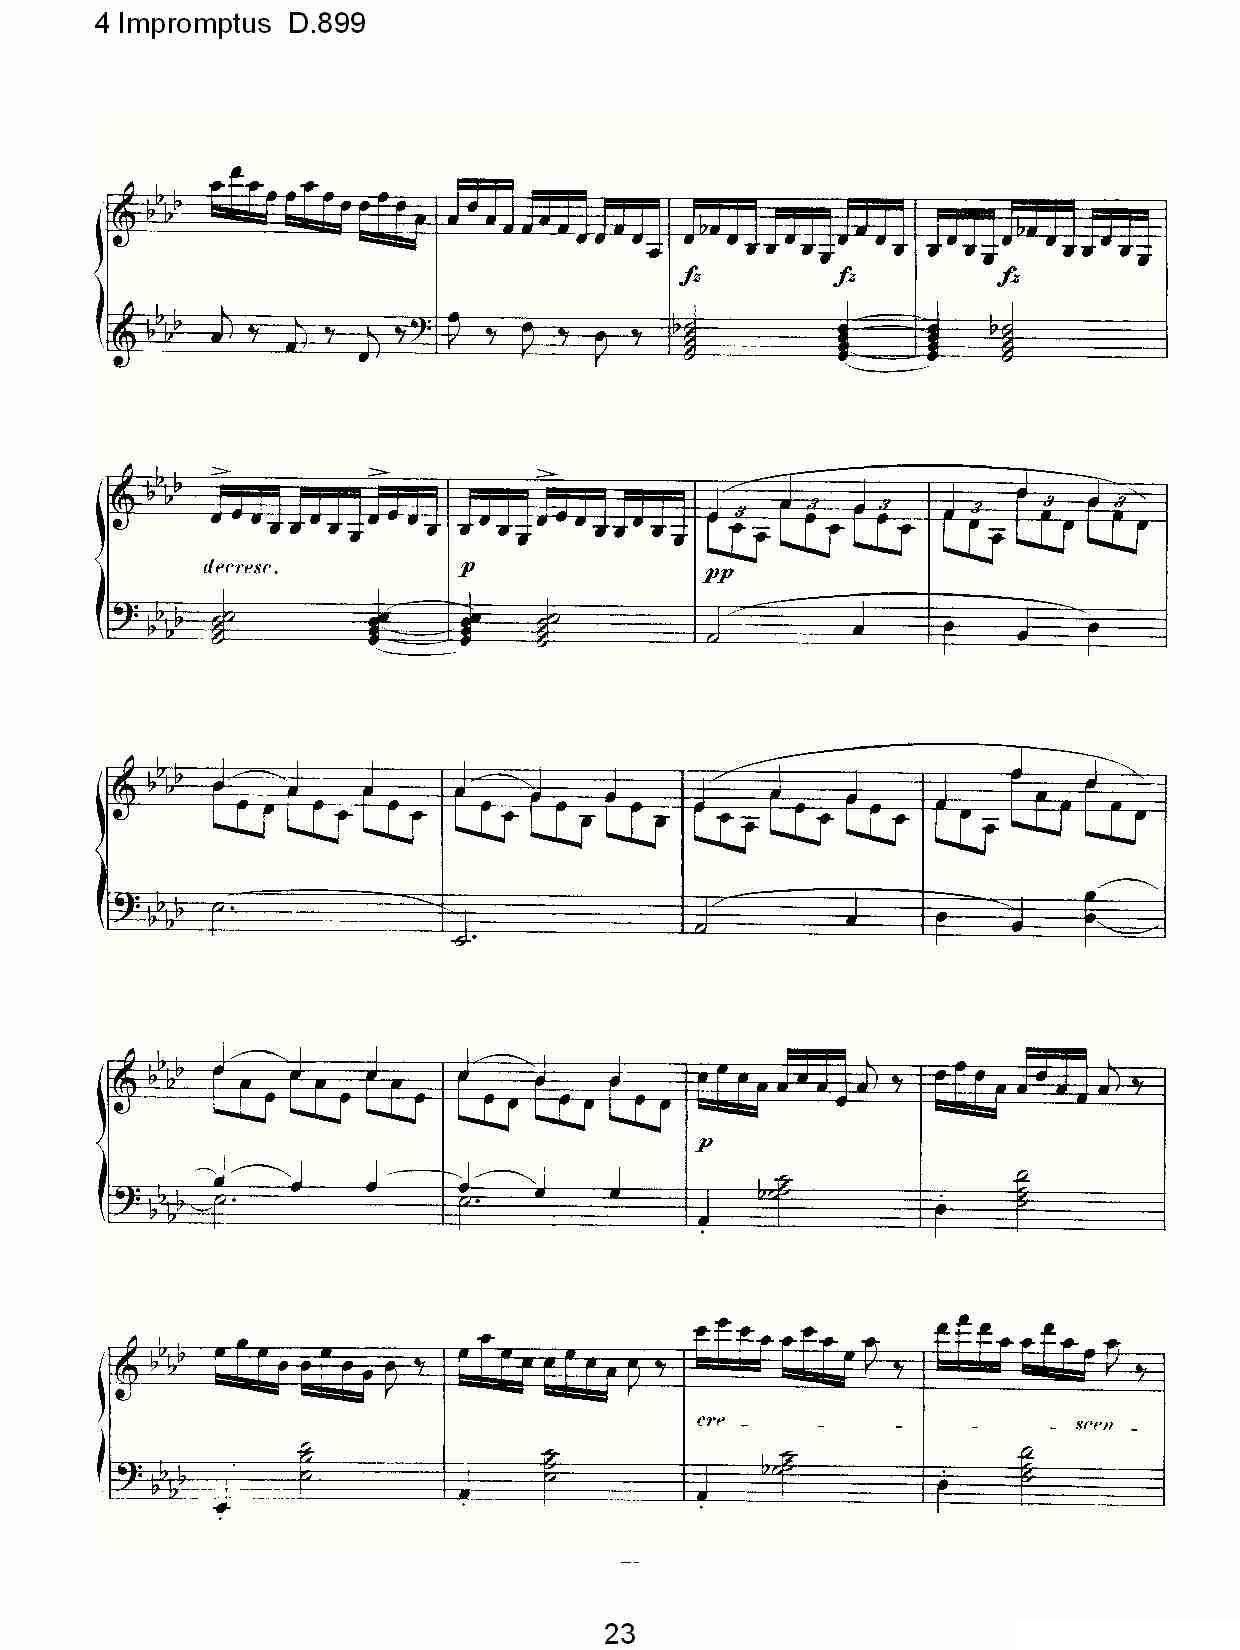 4 Impromptus D.899（4人即兴演奏 D.899）钢琴曲谱（图23）